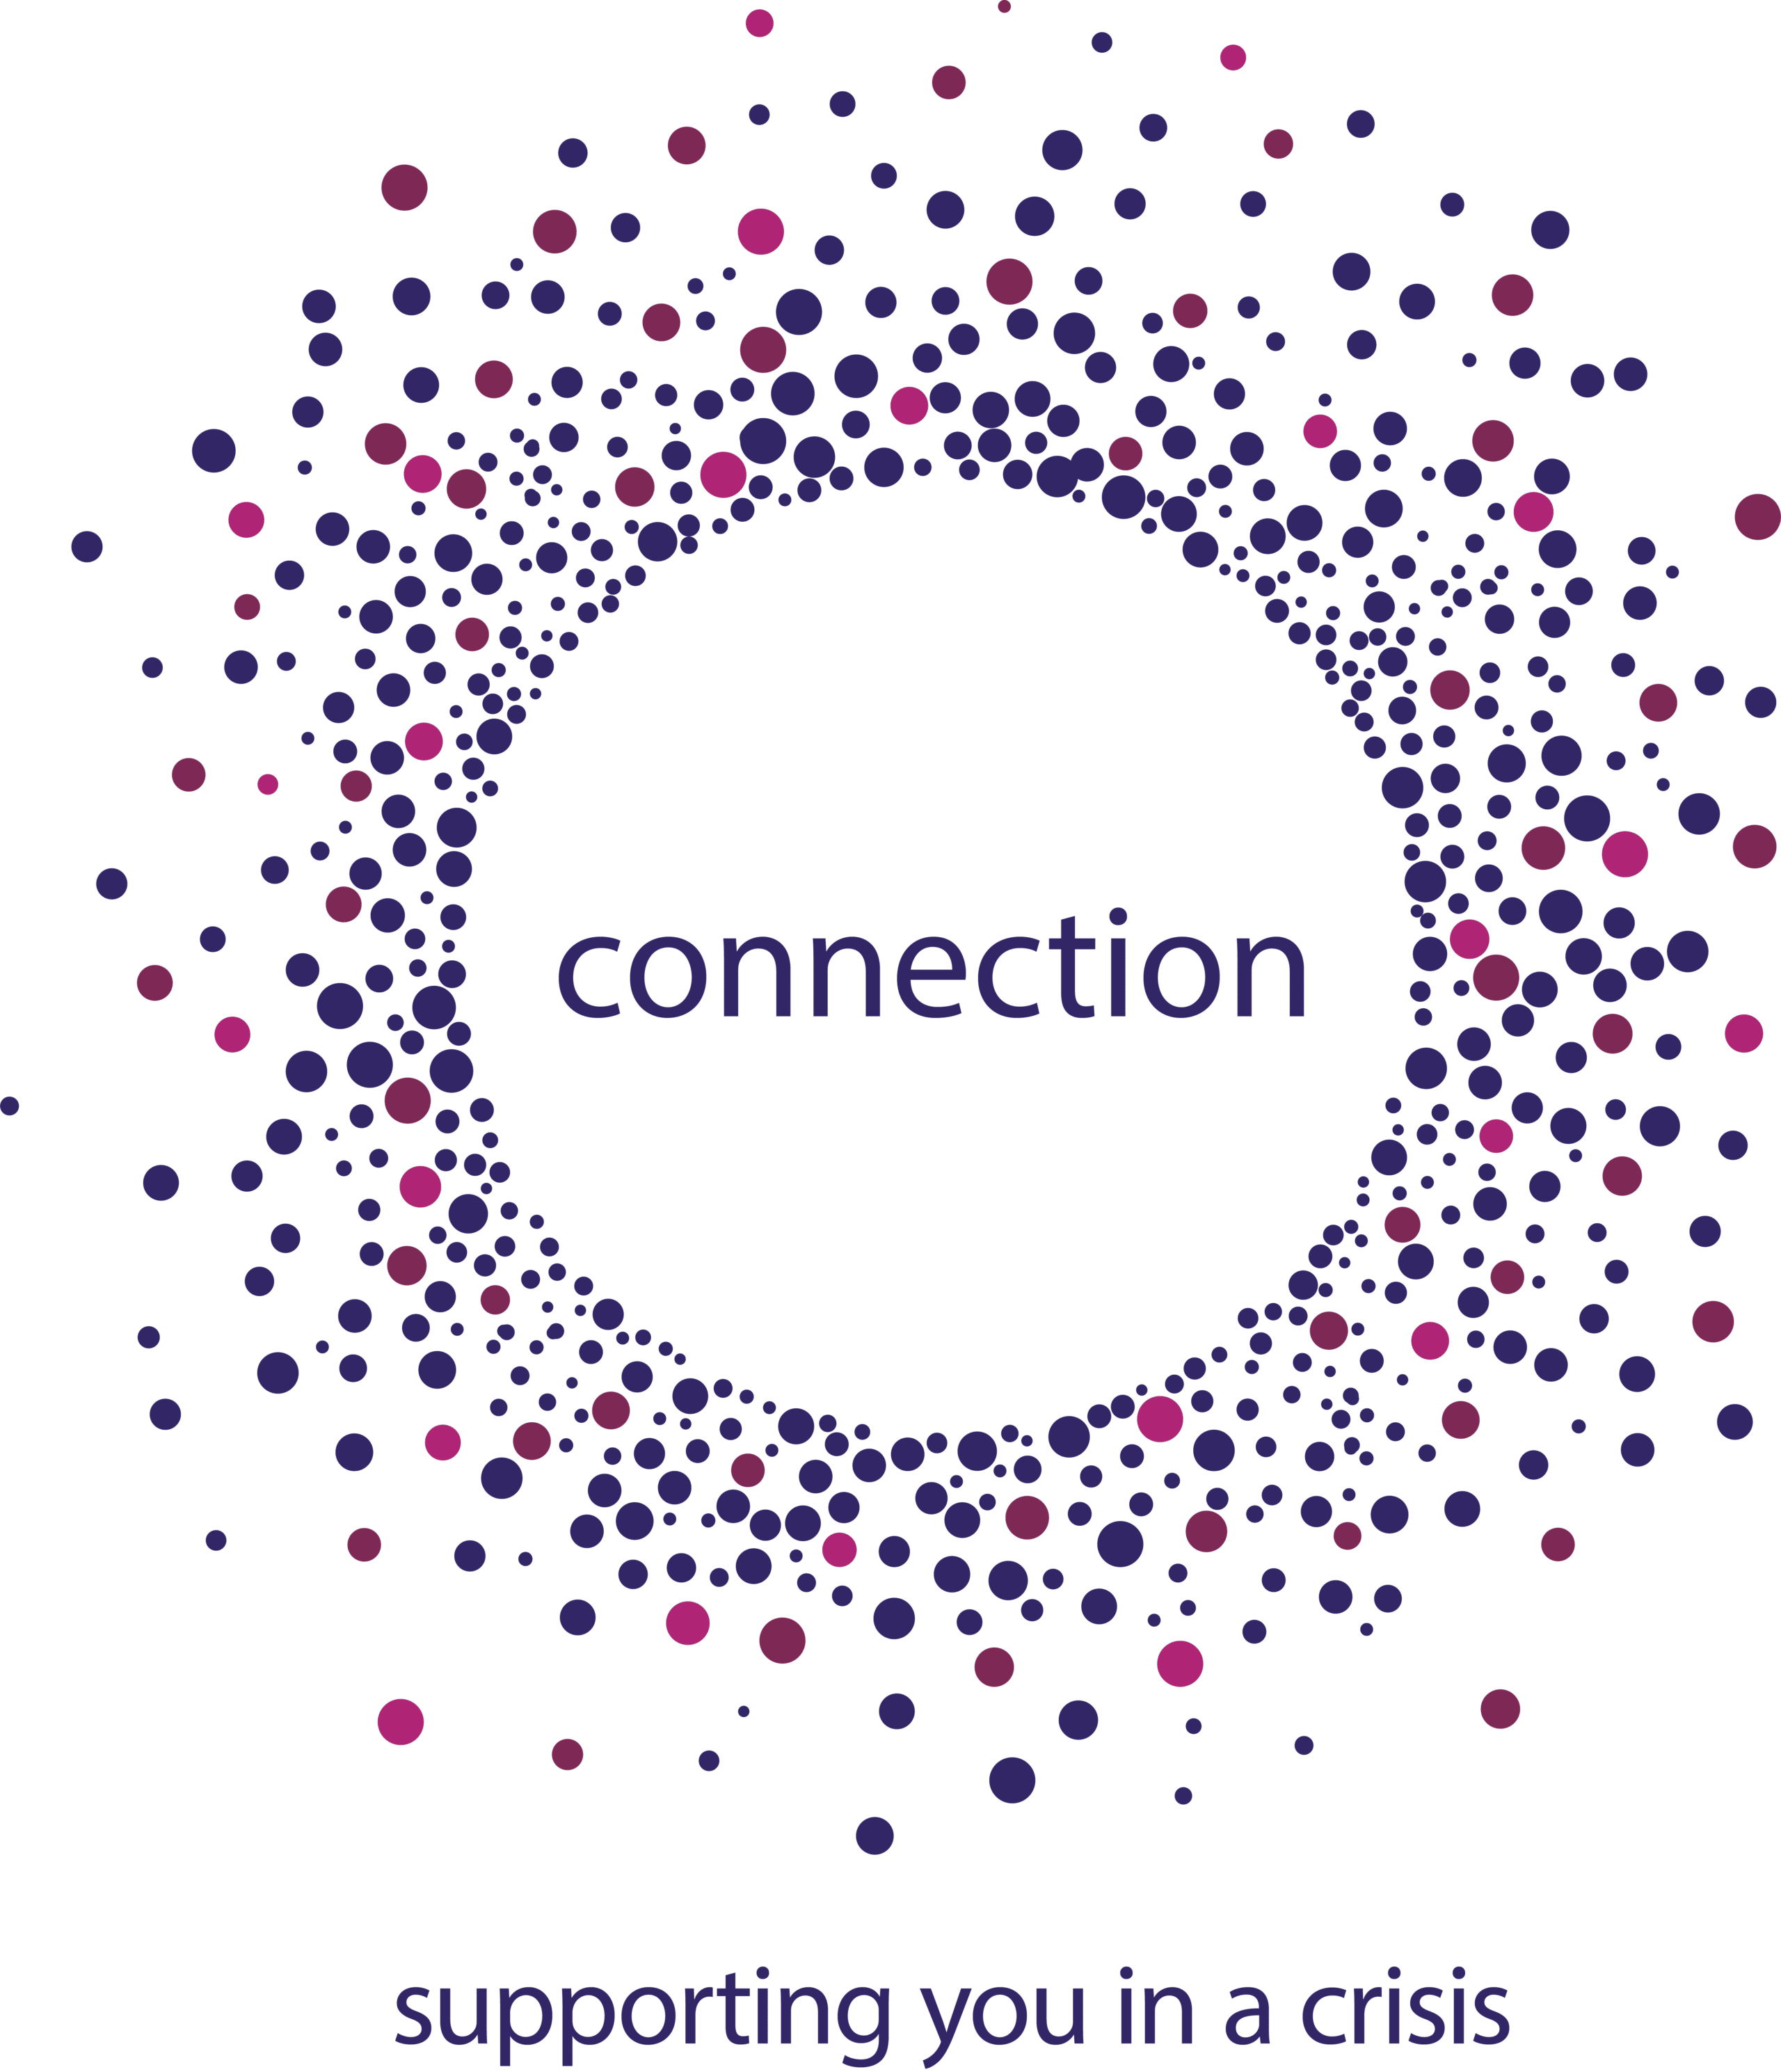 connection logo